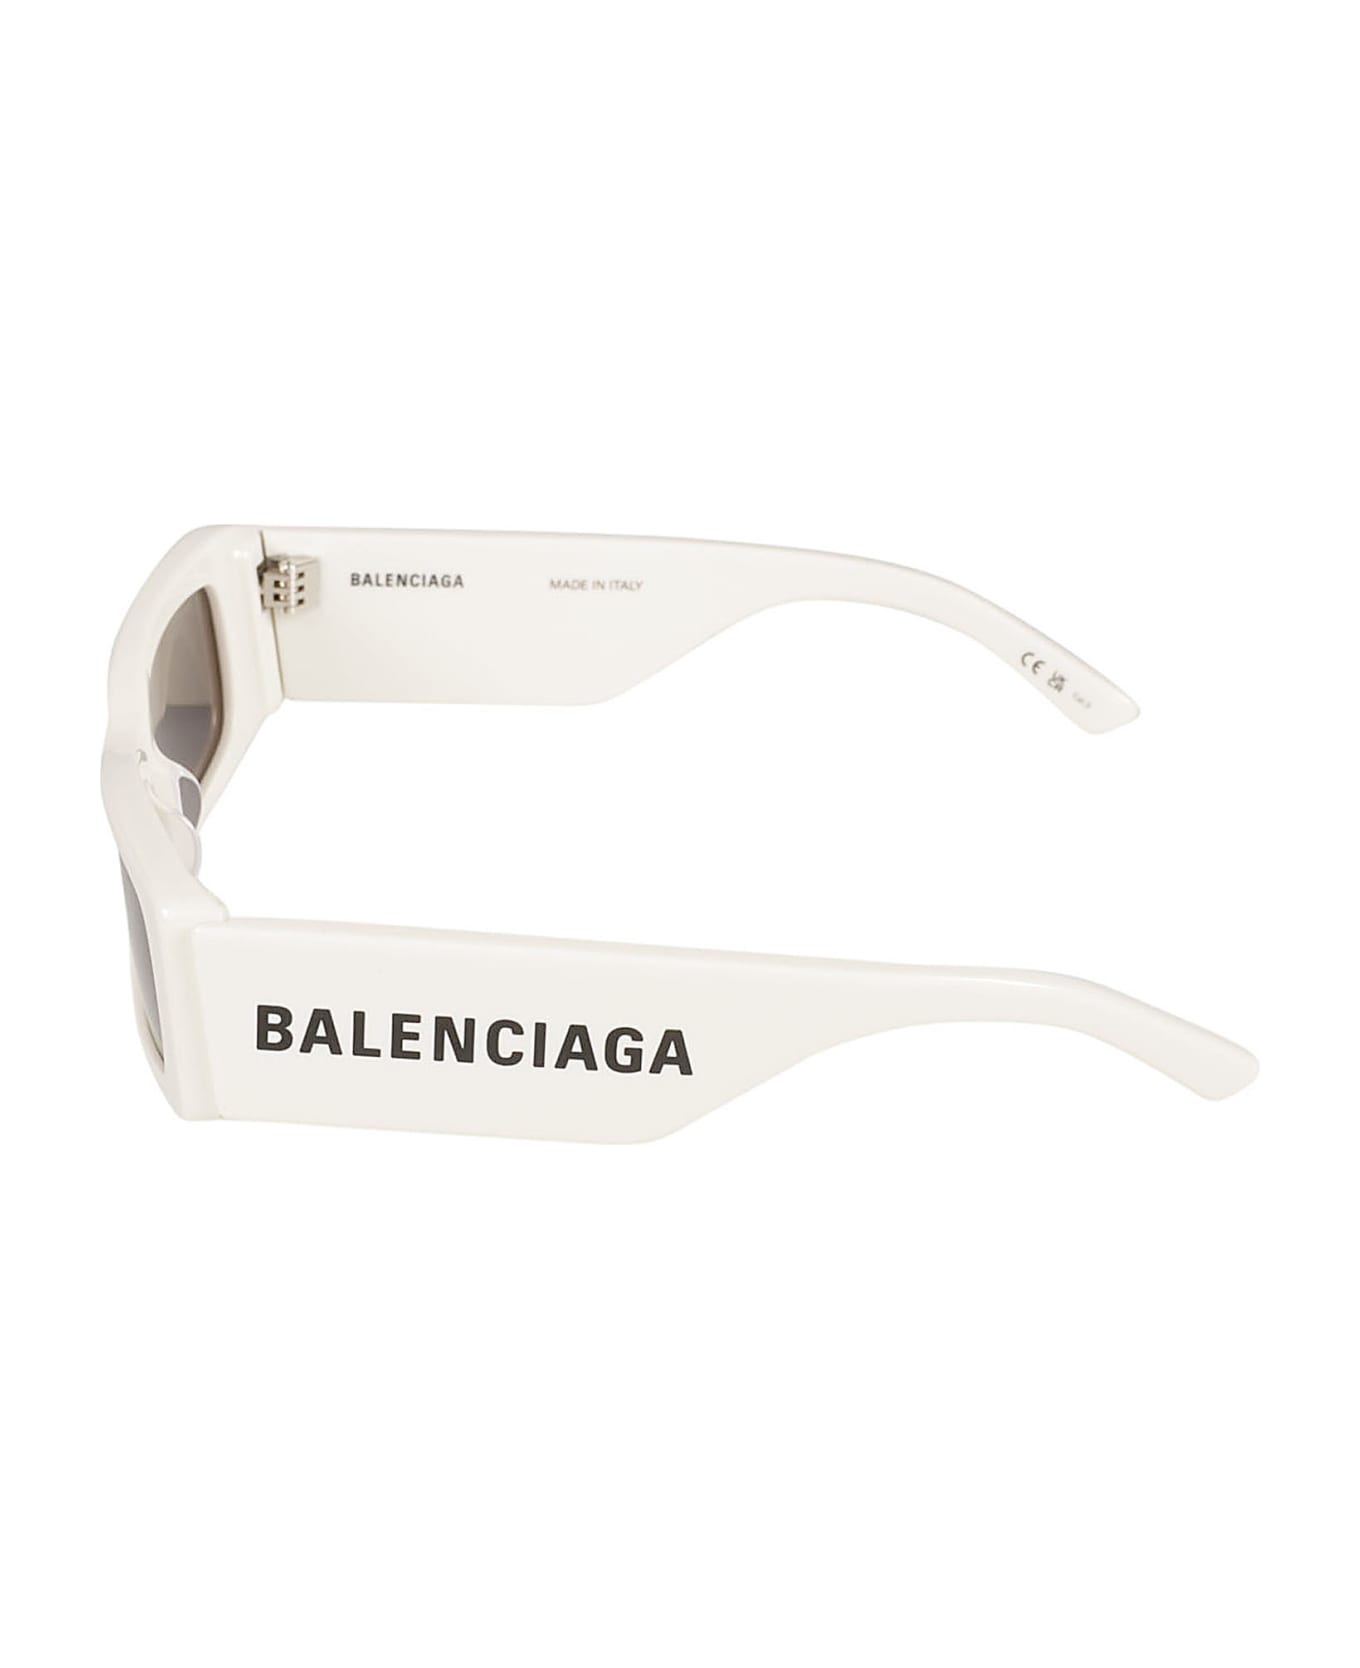 Balenciaga Eyewear Logo Sided Rectangular Frame Sunglasses - White/Grey